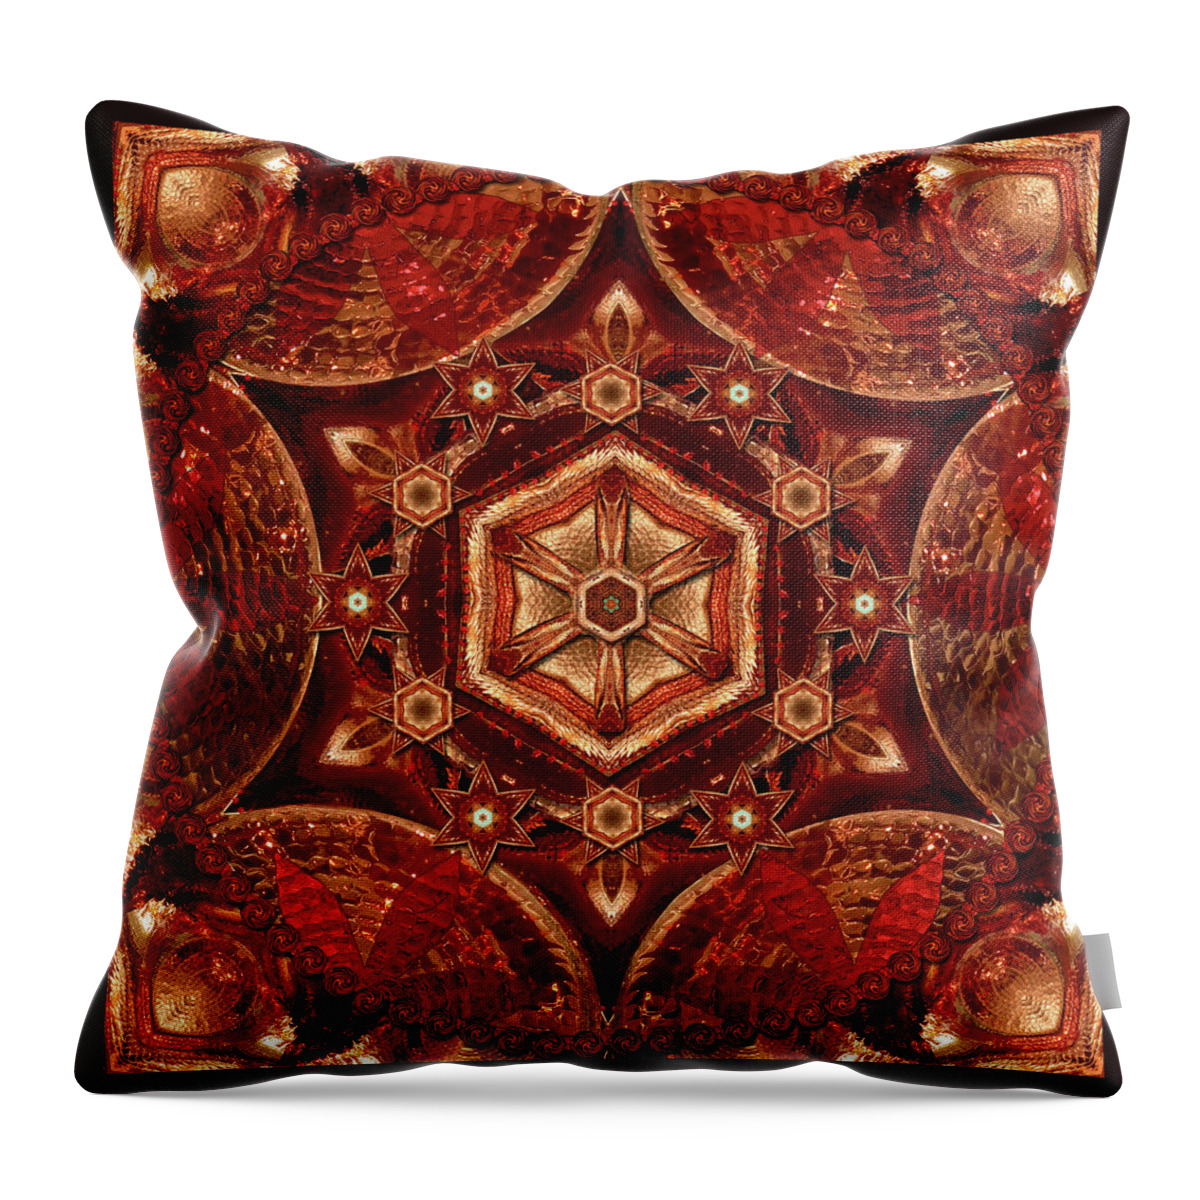 Art. Kaleidoscope Throw Pillow featuring the digital art Meditation in Copper by Deborah Smith